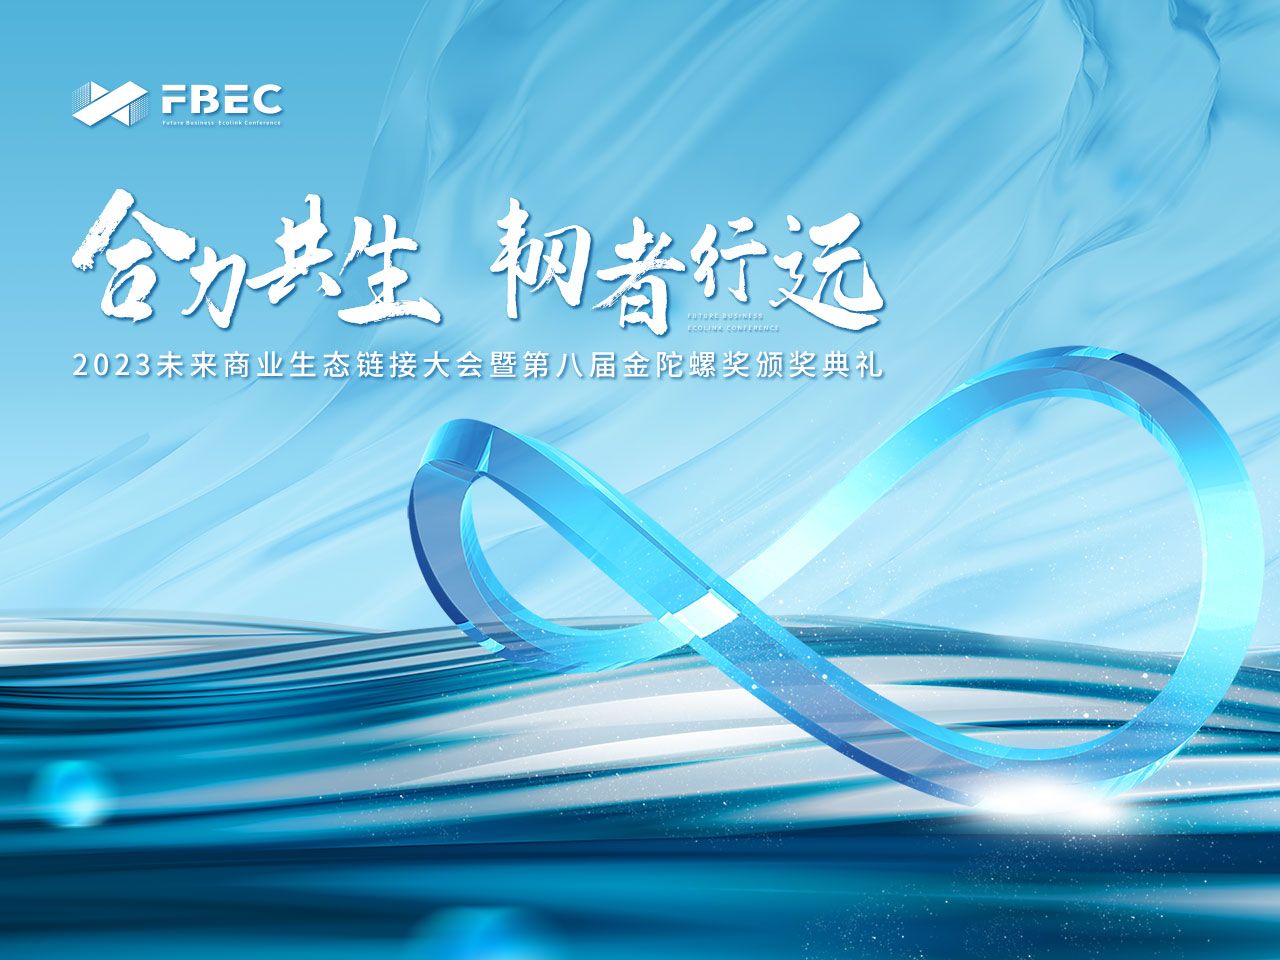 FBEC2023 | JBD 首席运营官 徐慧文确认出席并发表主题演讲